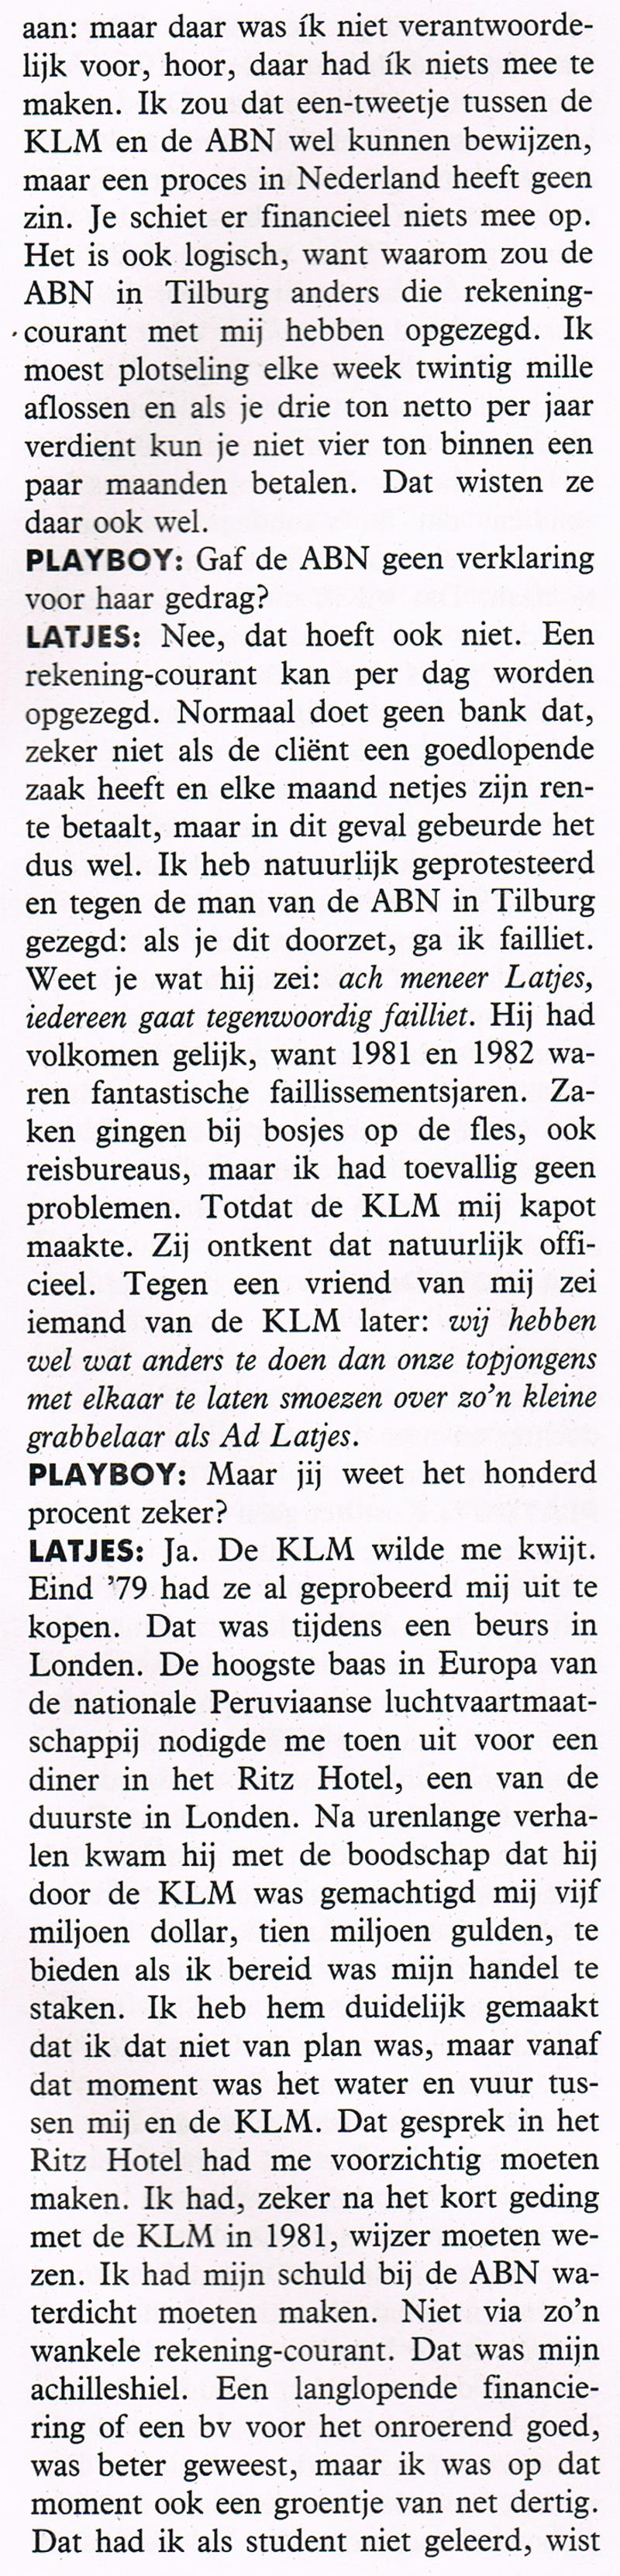 Ad Latjes in de Playboy Augustus 1990